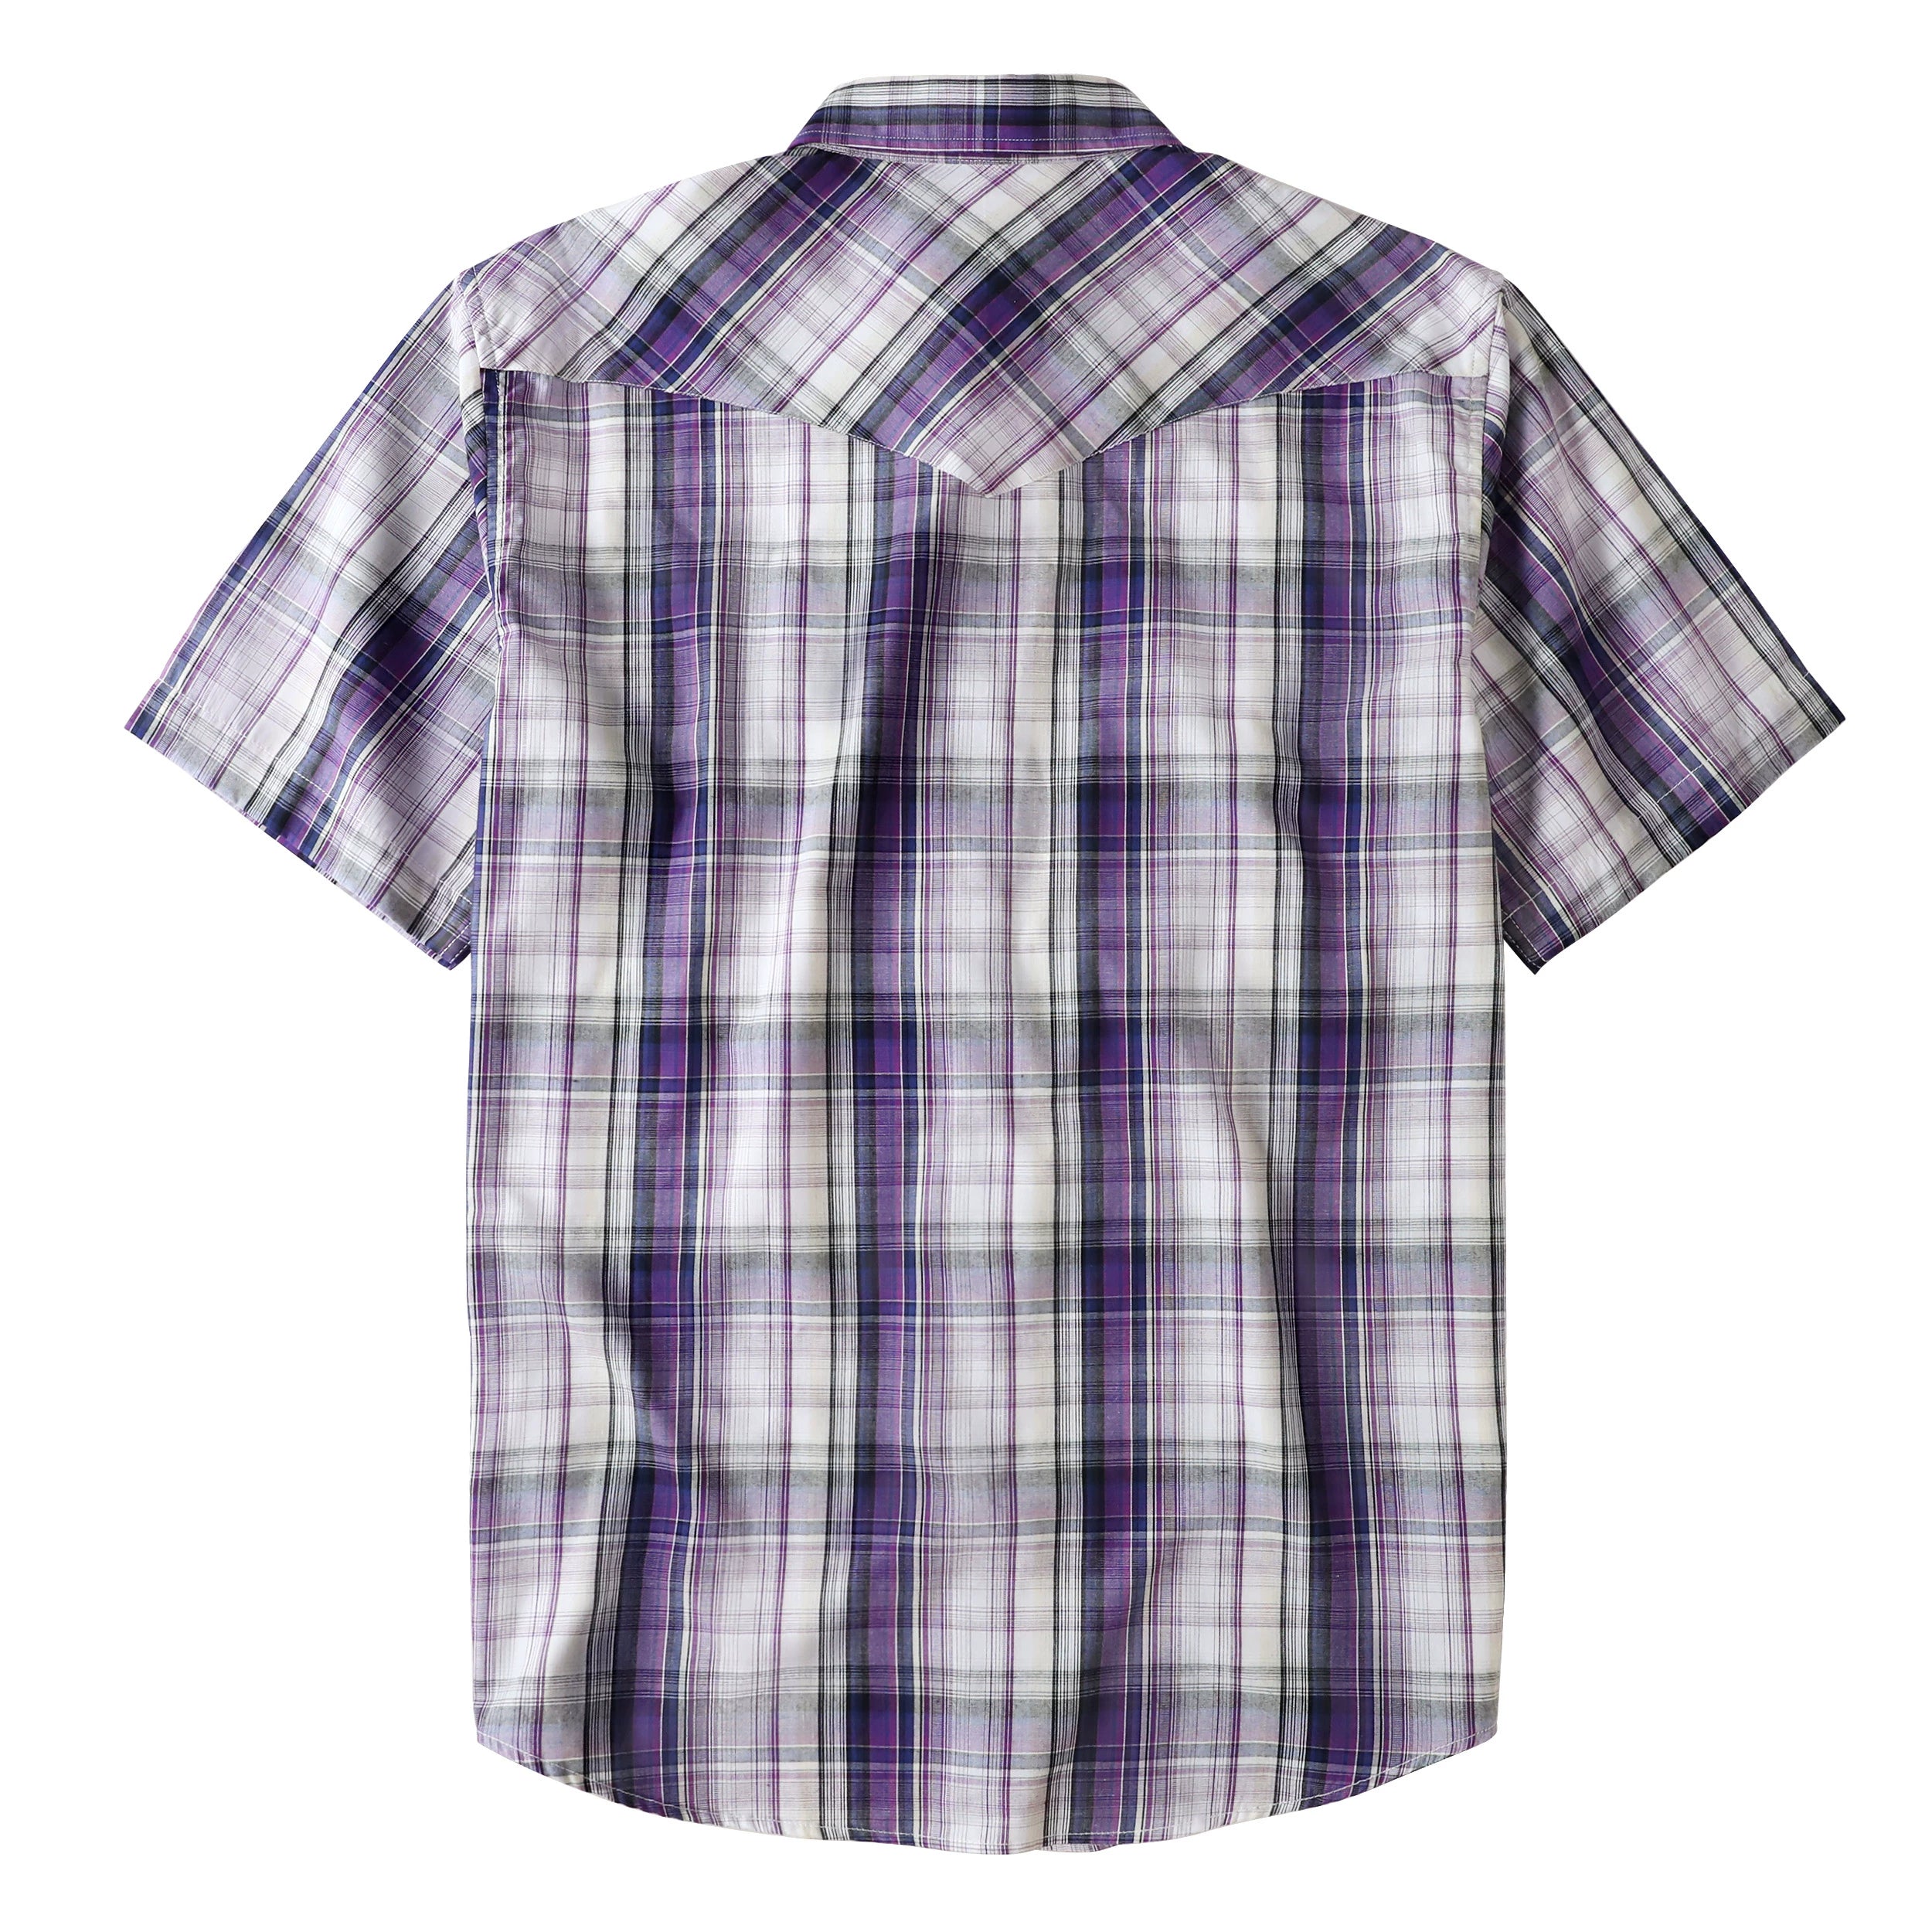 Dubinik® Western Shirts for Men Short Sleeve Plaid Pearl Snap Shirts for Men Button Up Shirt Cowboy Casual Work Shirt#41008